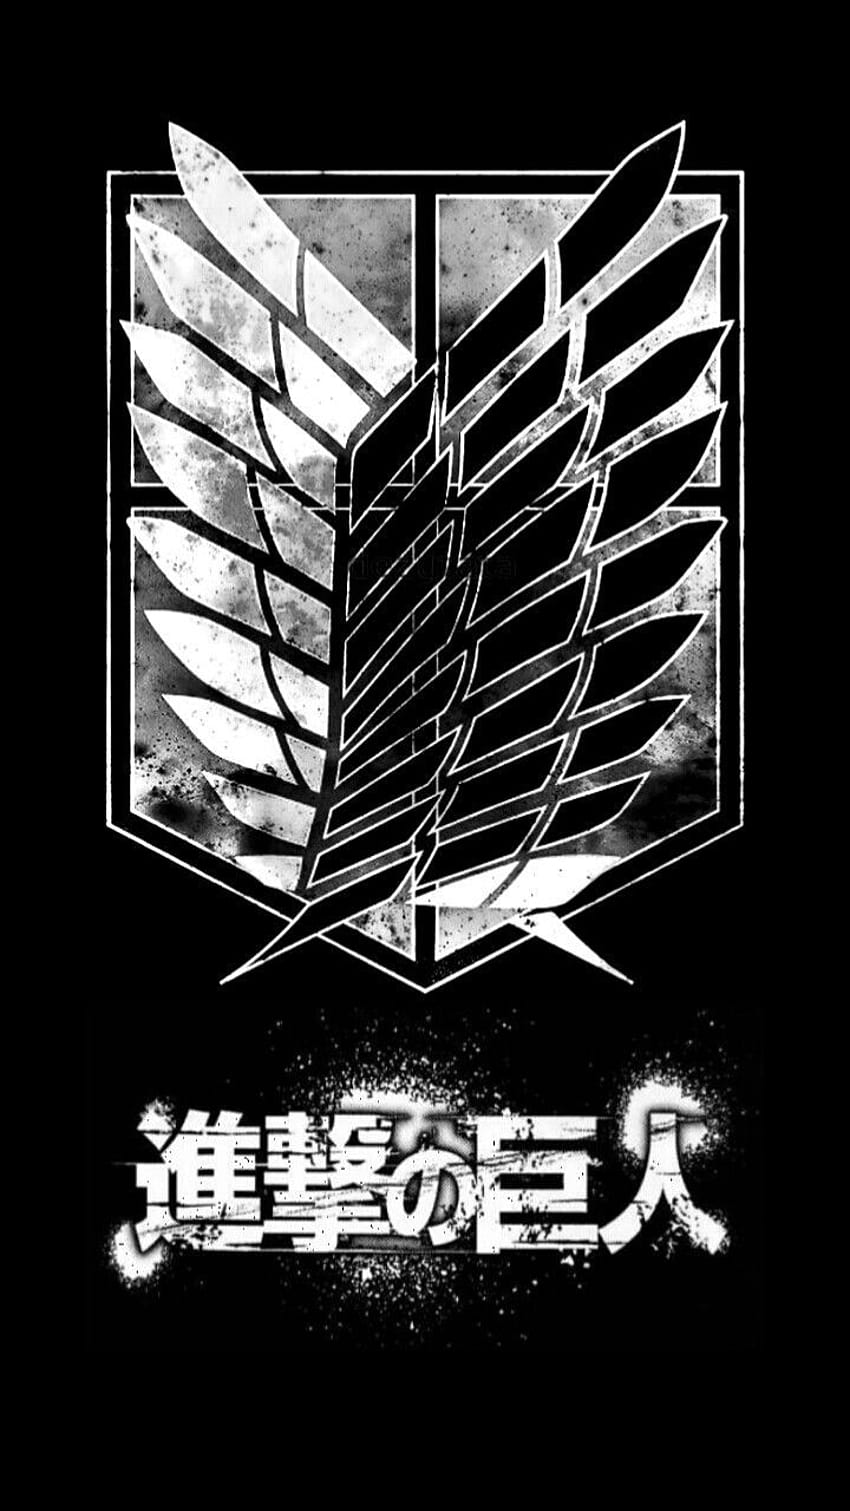 DECAL VINYL TRUCK Car Sticker - Anime Attack On Titan SNK Recon Corps Logo  $8.00 - PicClick